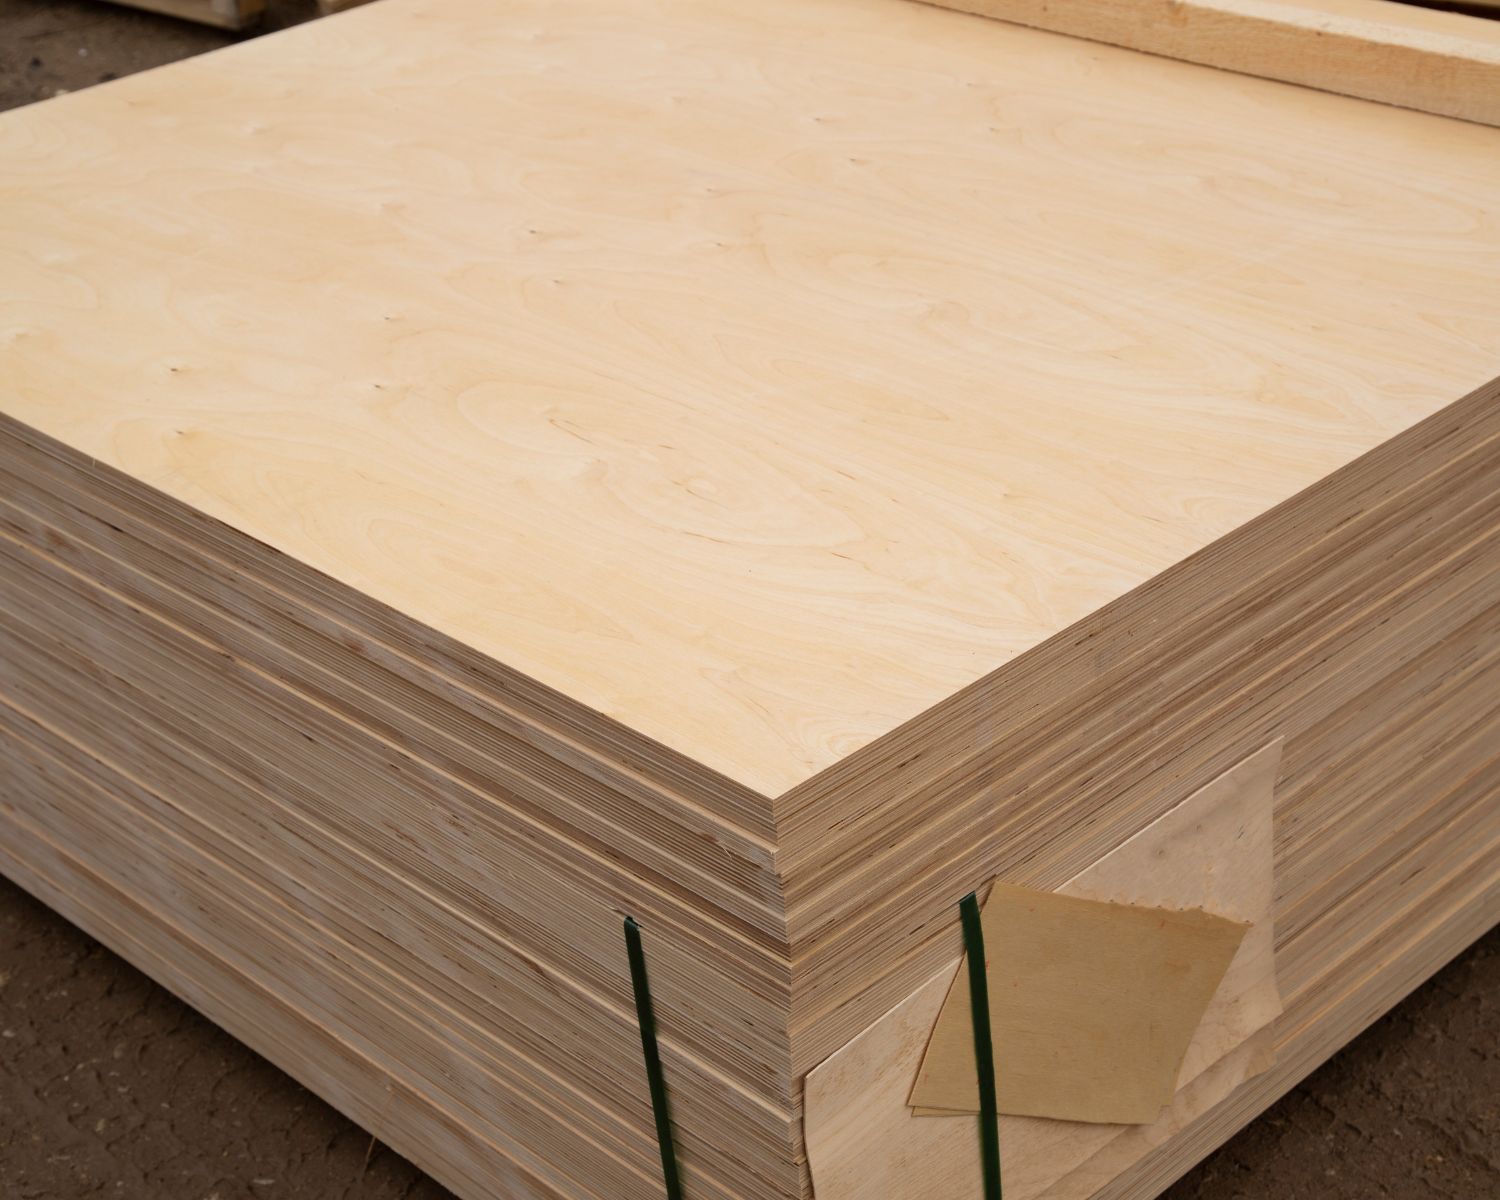 Benefits of Plywood